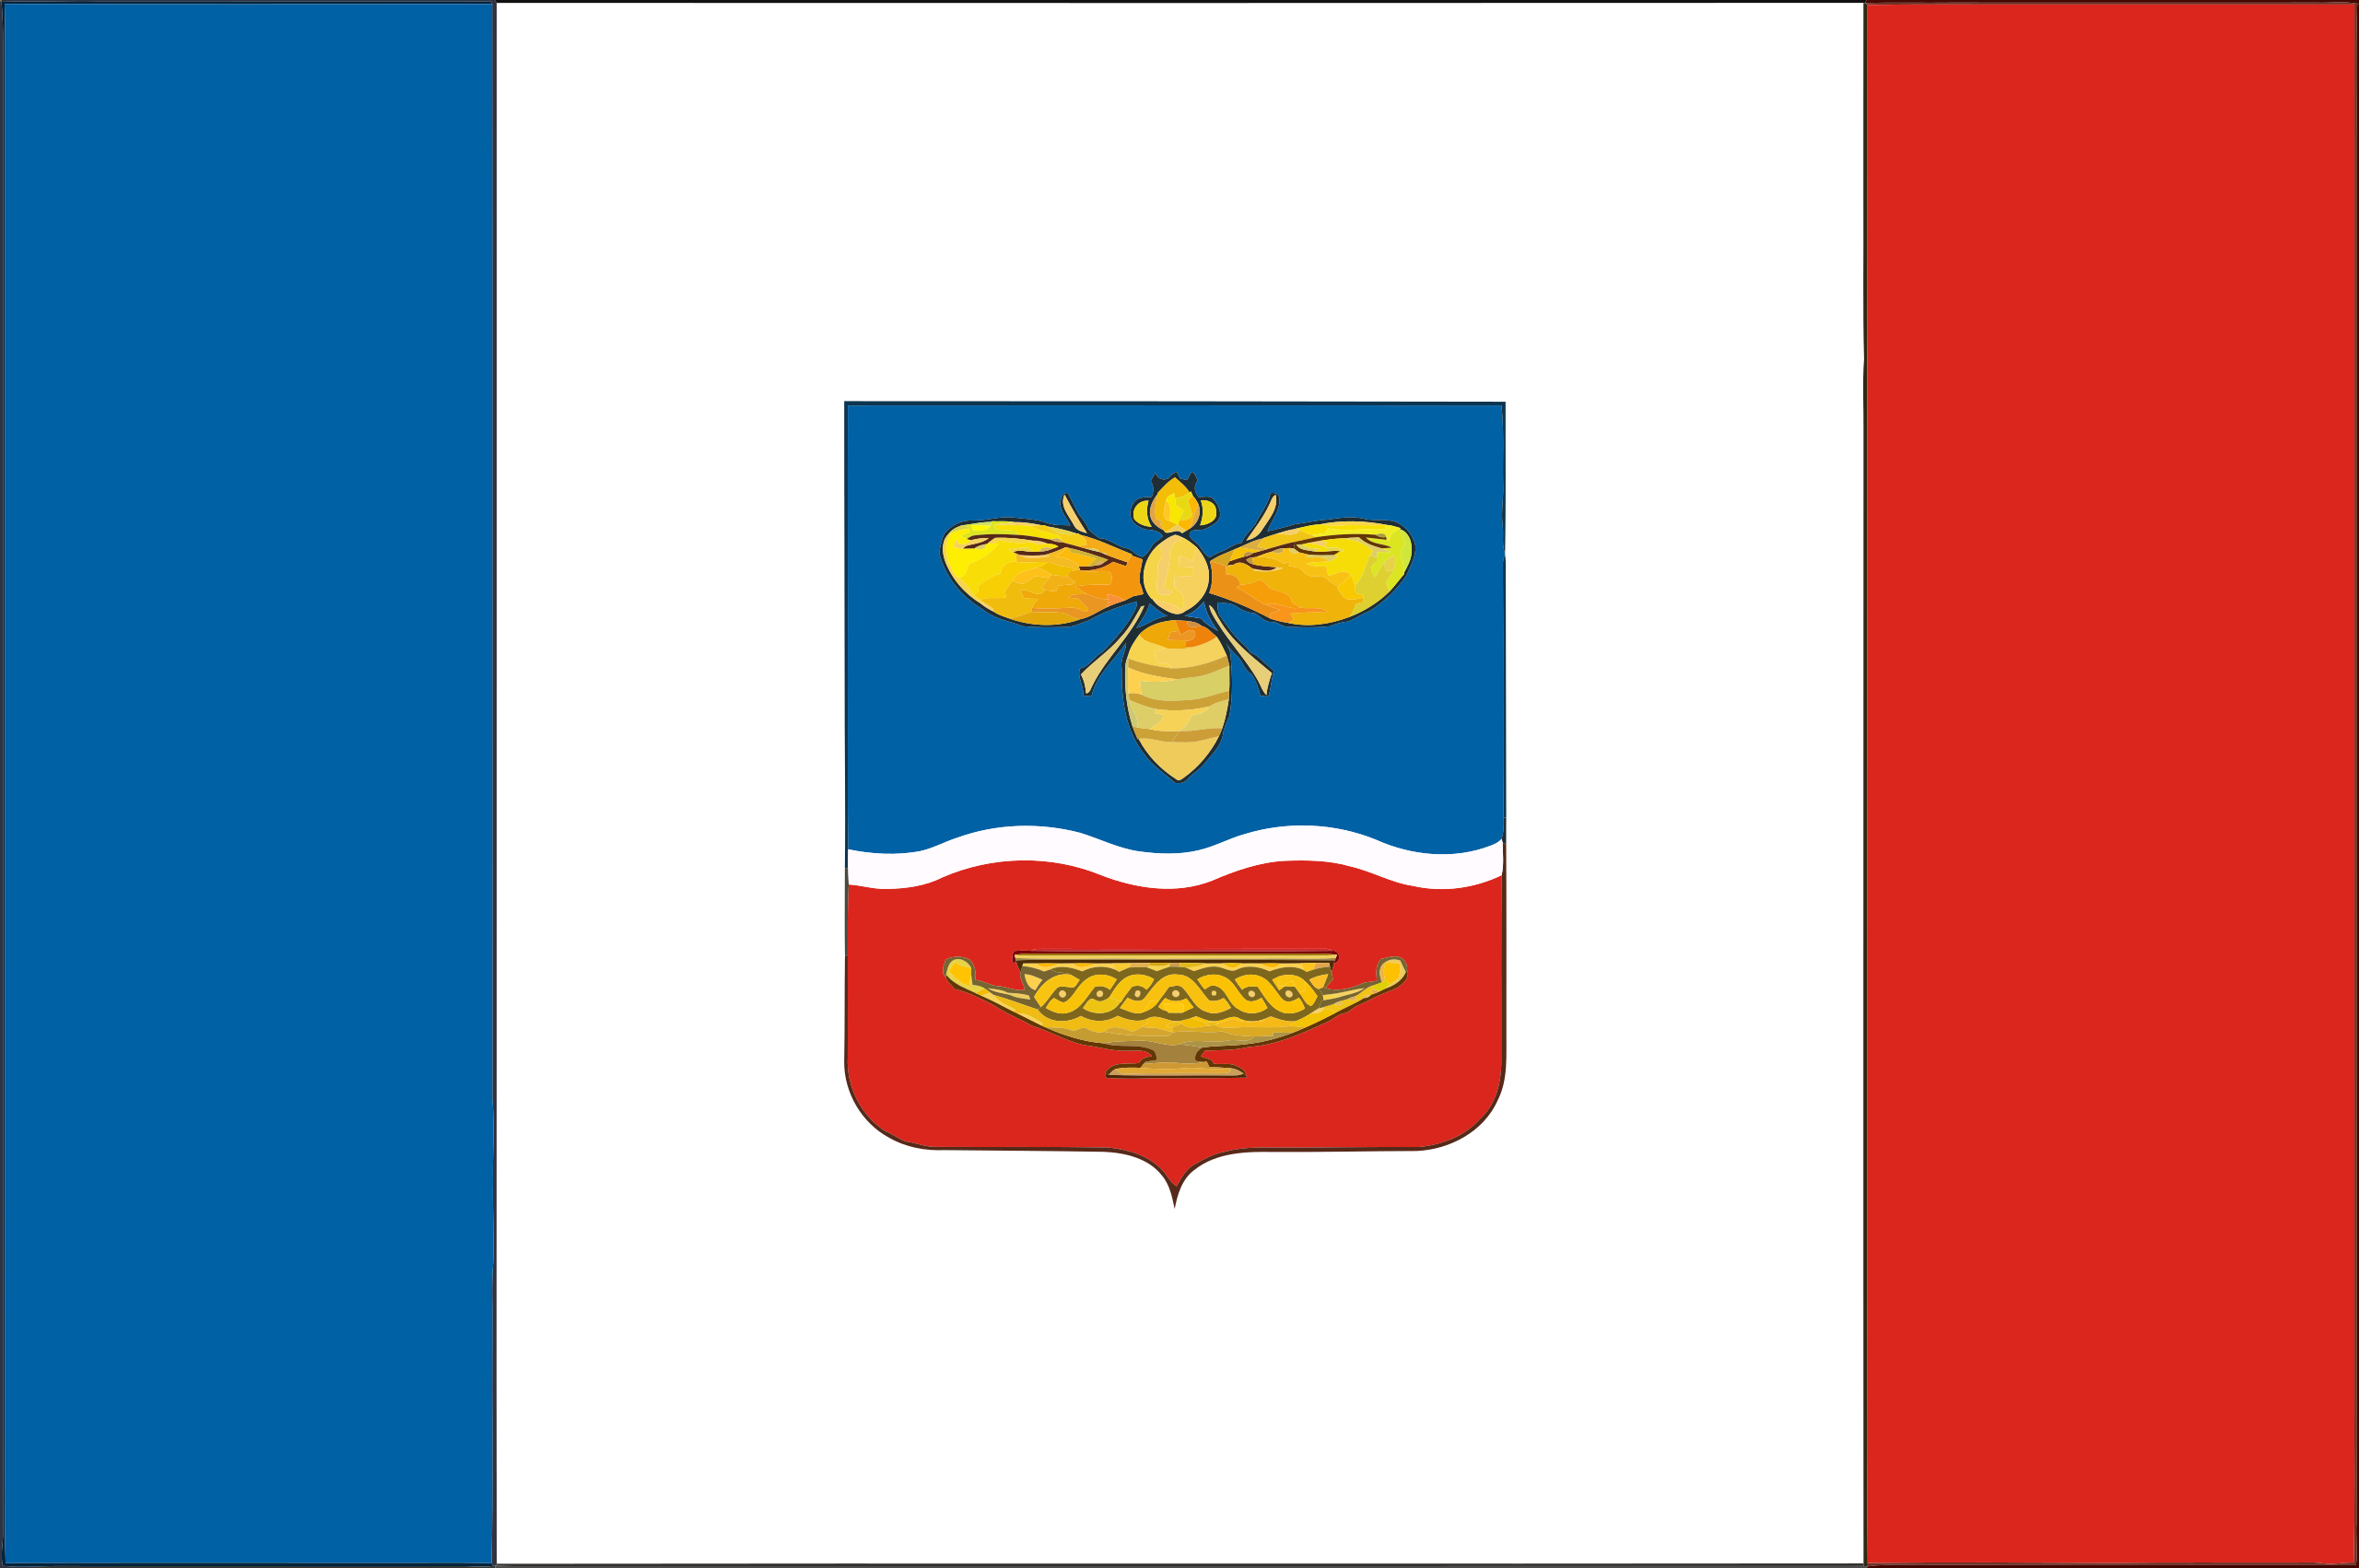 File:Simferopol flag.svg - Wikipedia